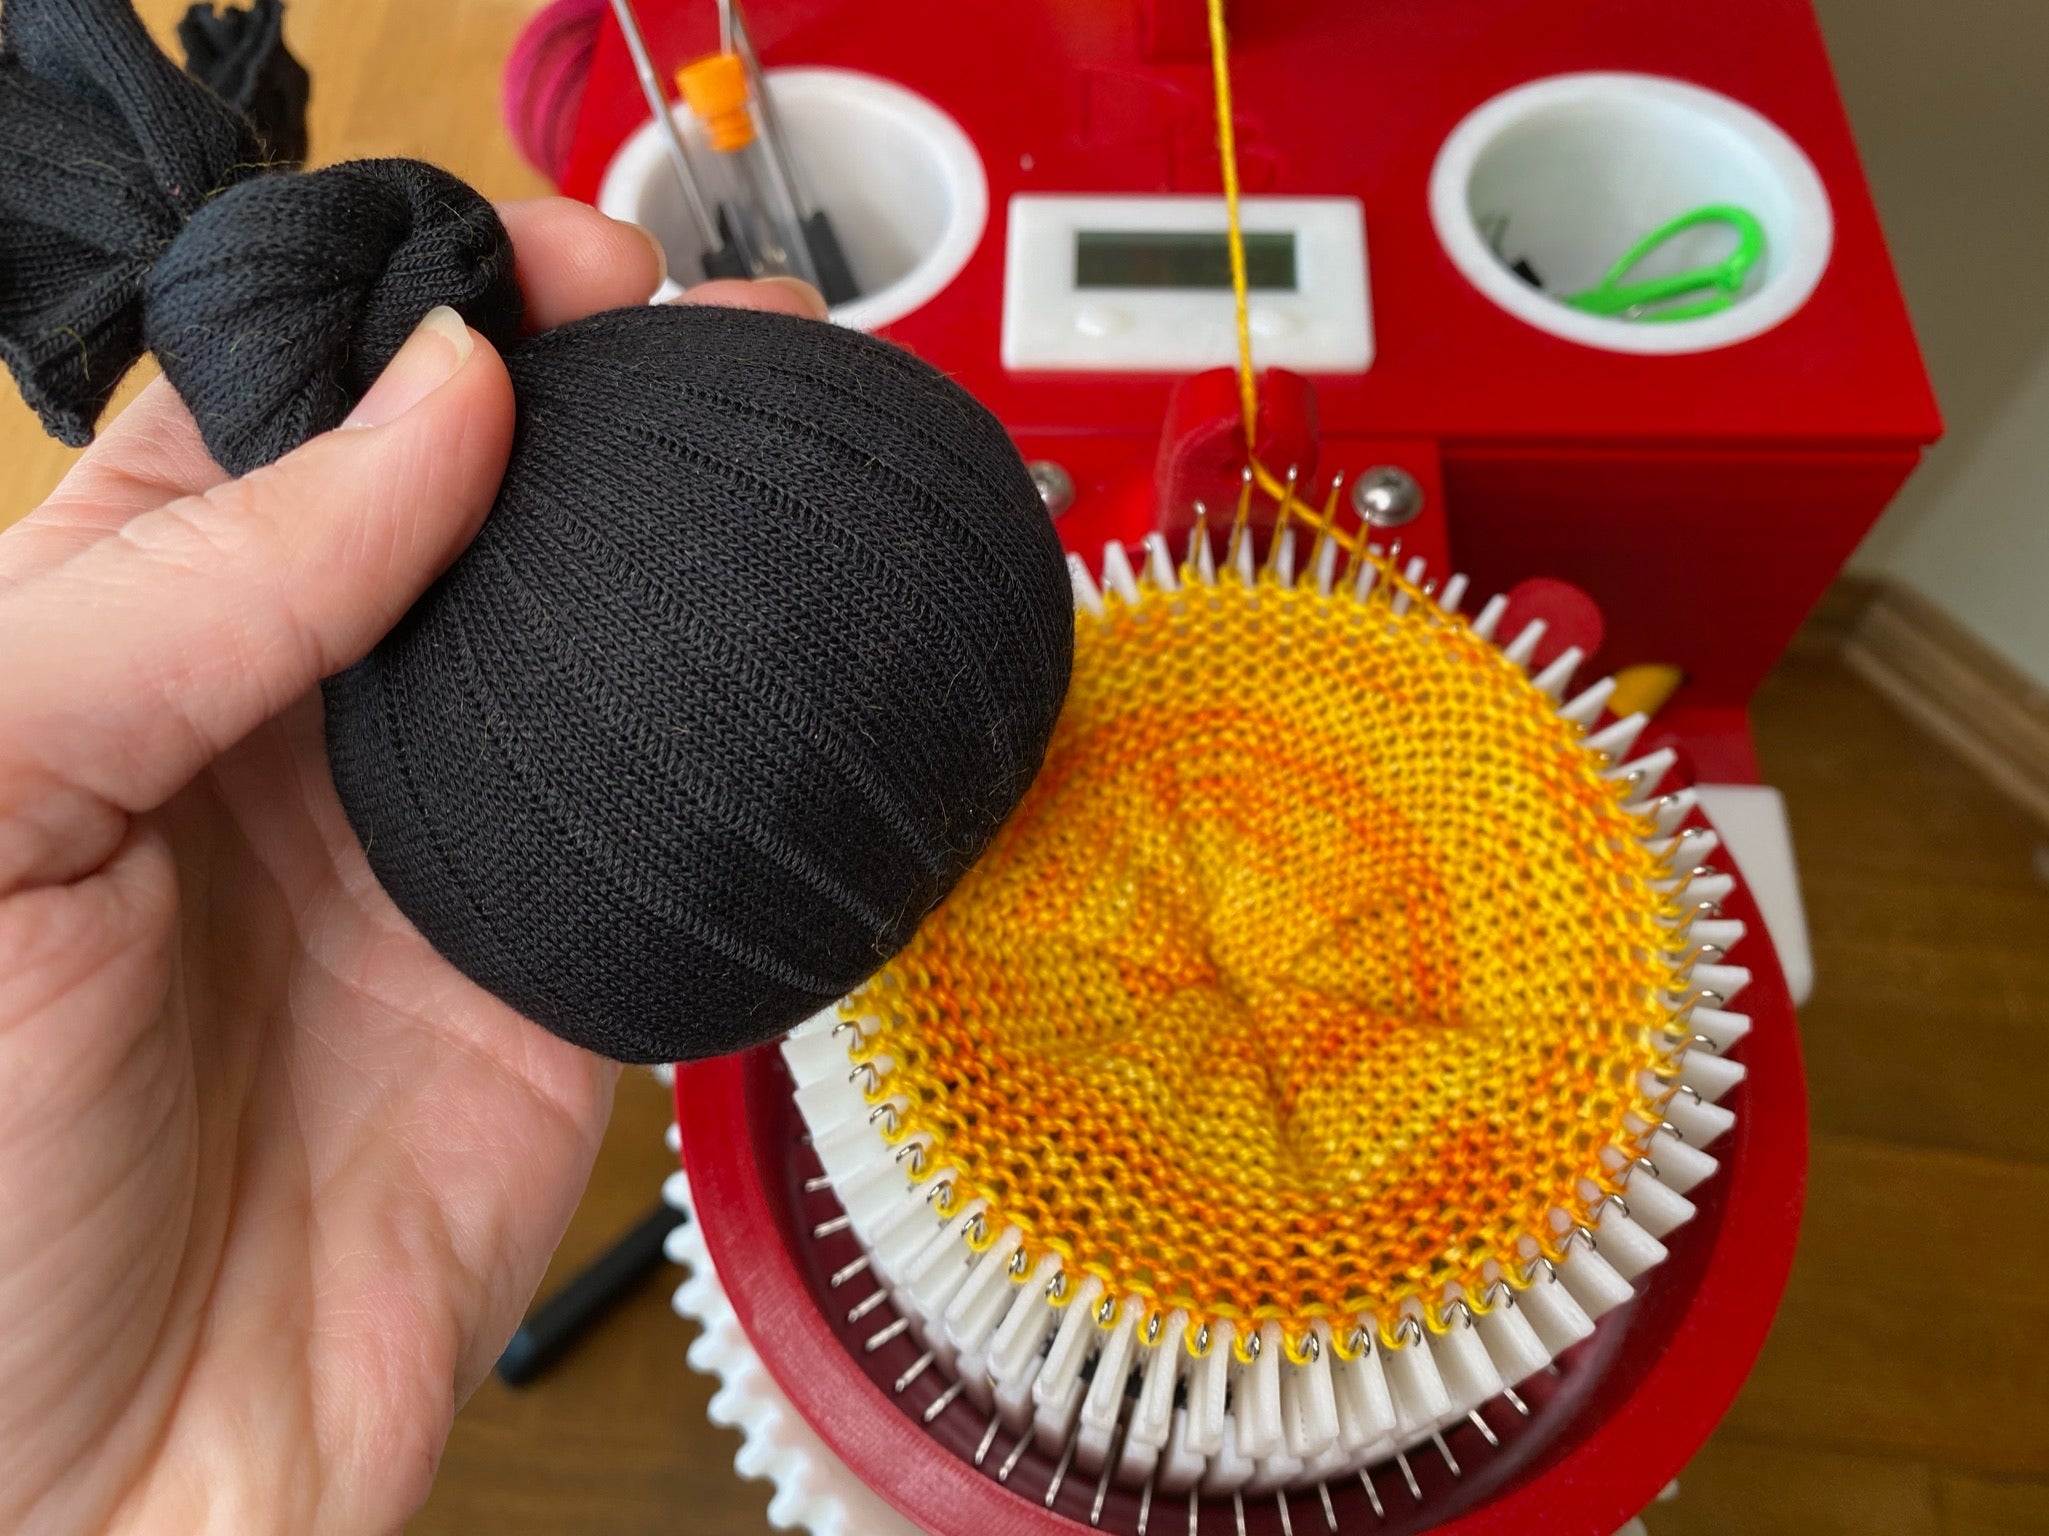 The Dean and Bean circular sock machine is amazing! : r/MachineKnitting